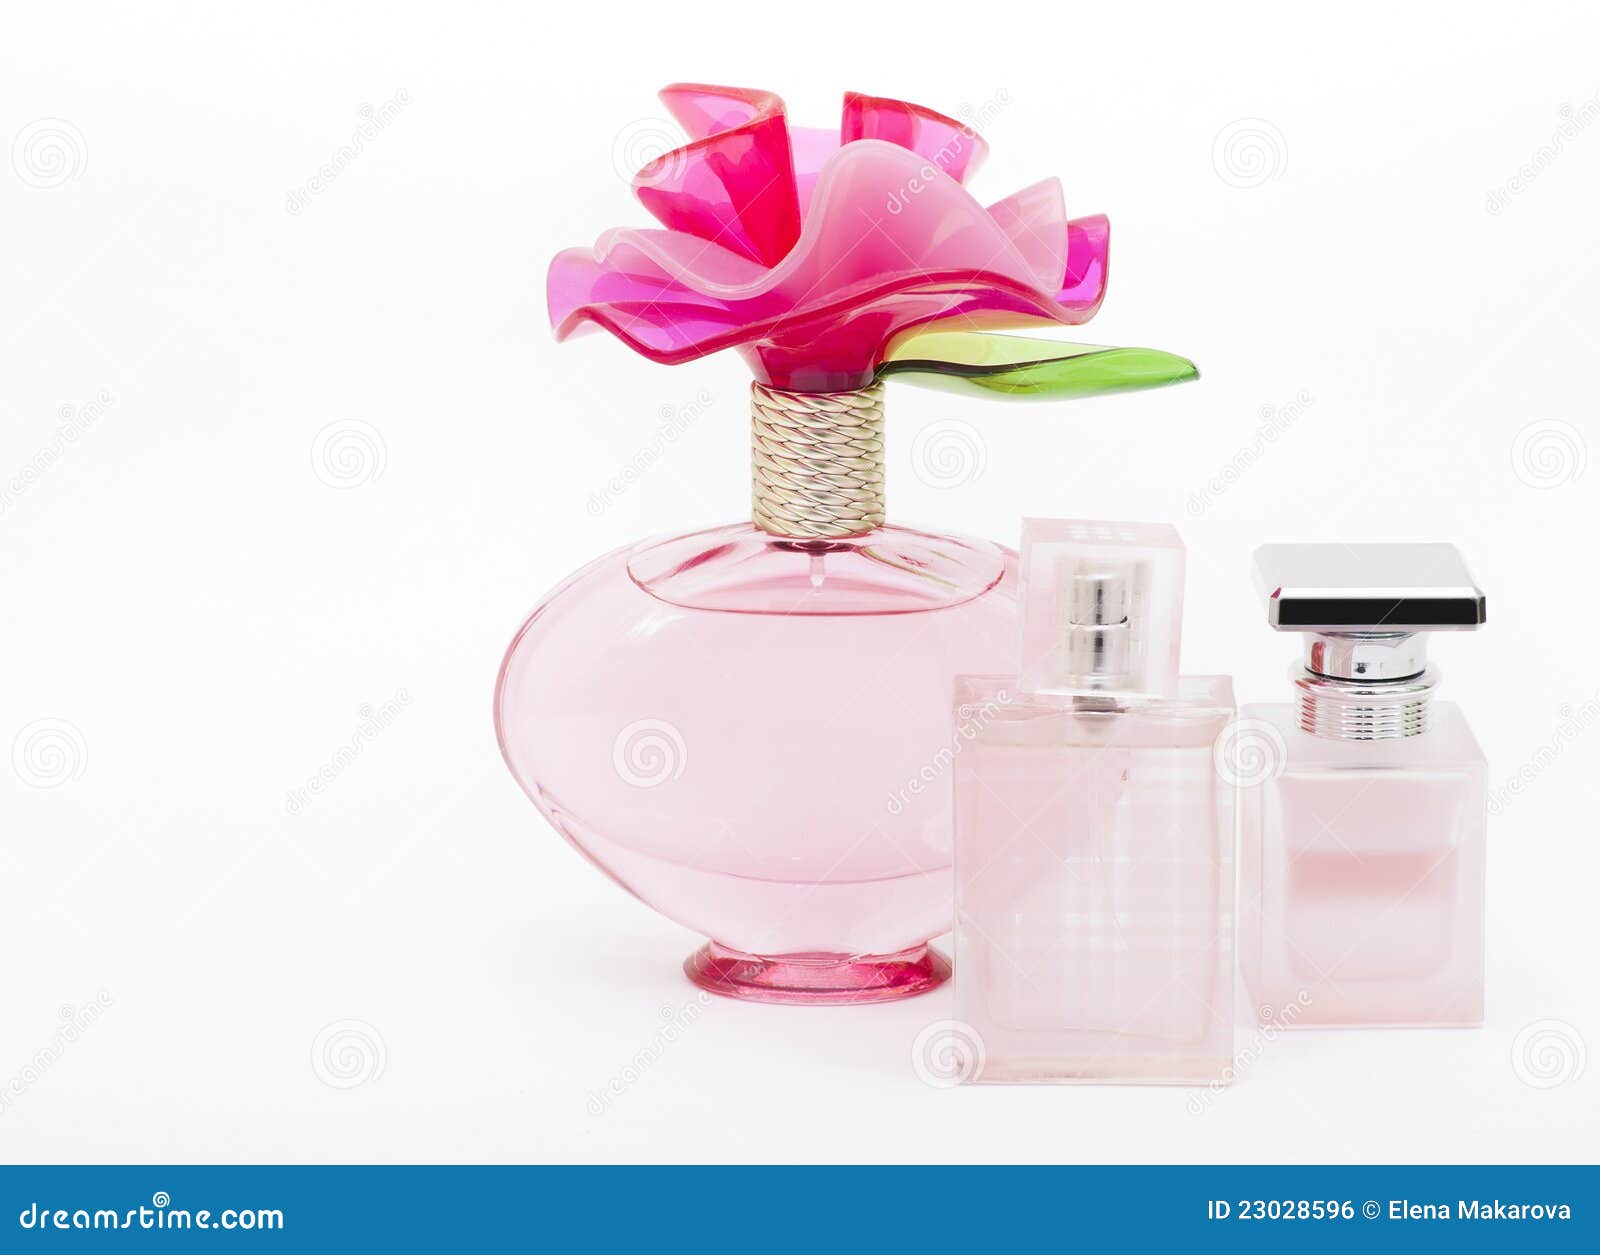 female bottles with perfum